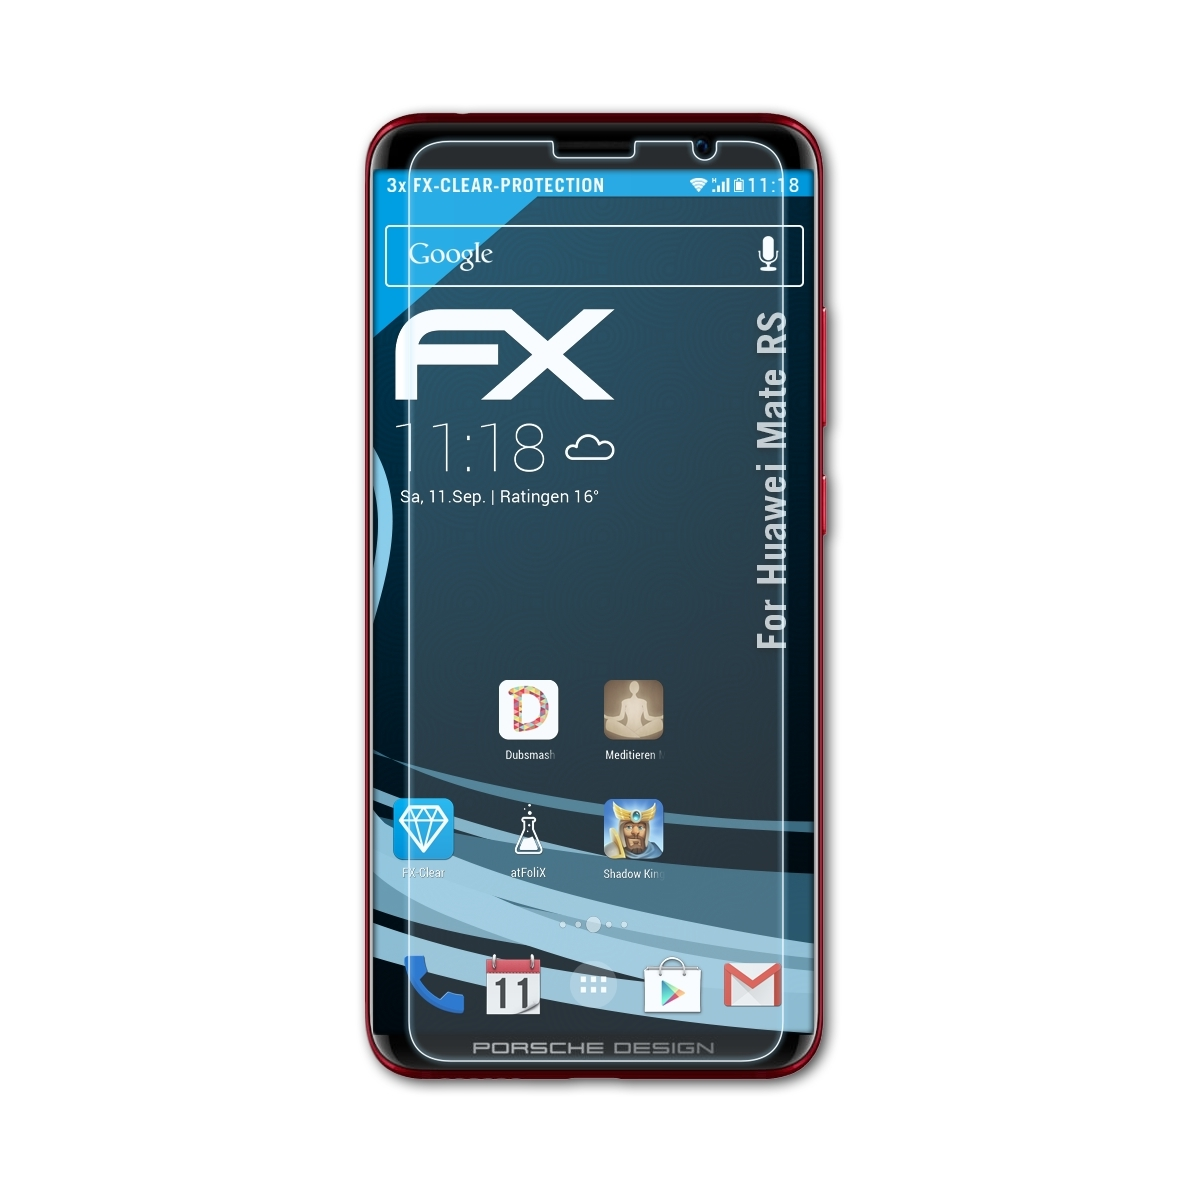 RS) ATFOLIX 3x Displayschutz(für Mate Huawei FX-Clear